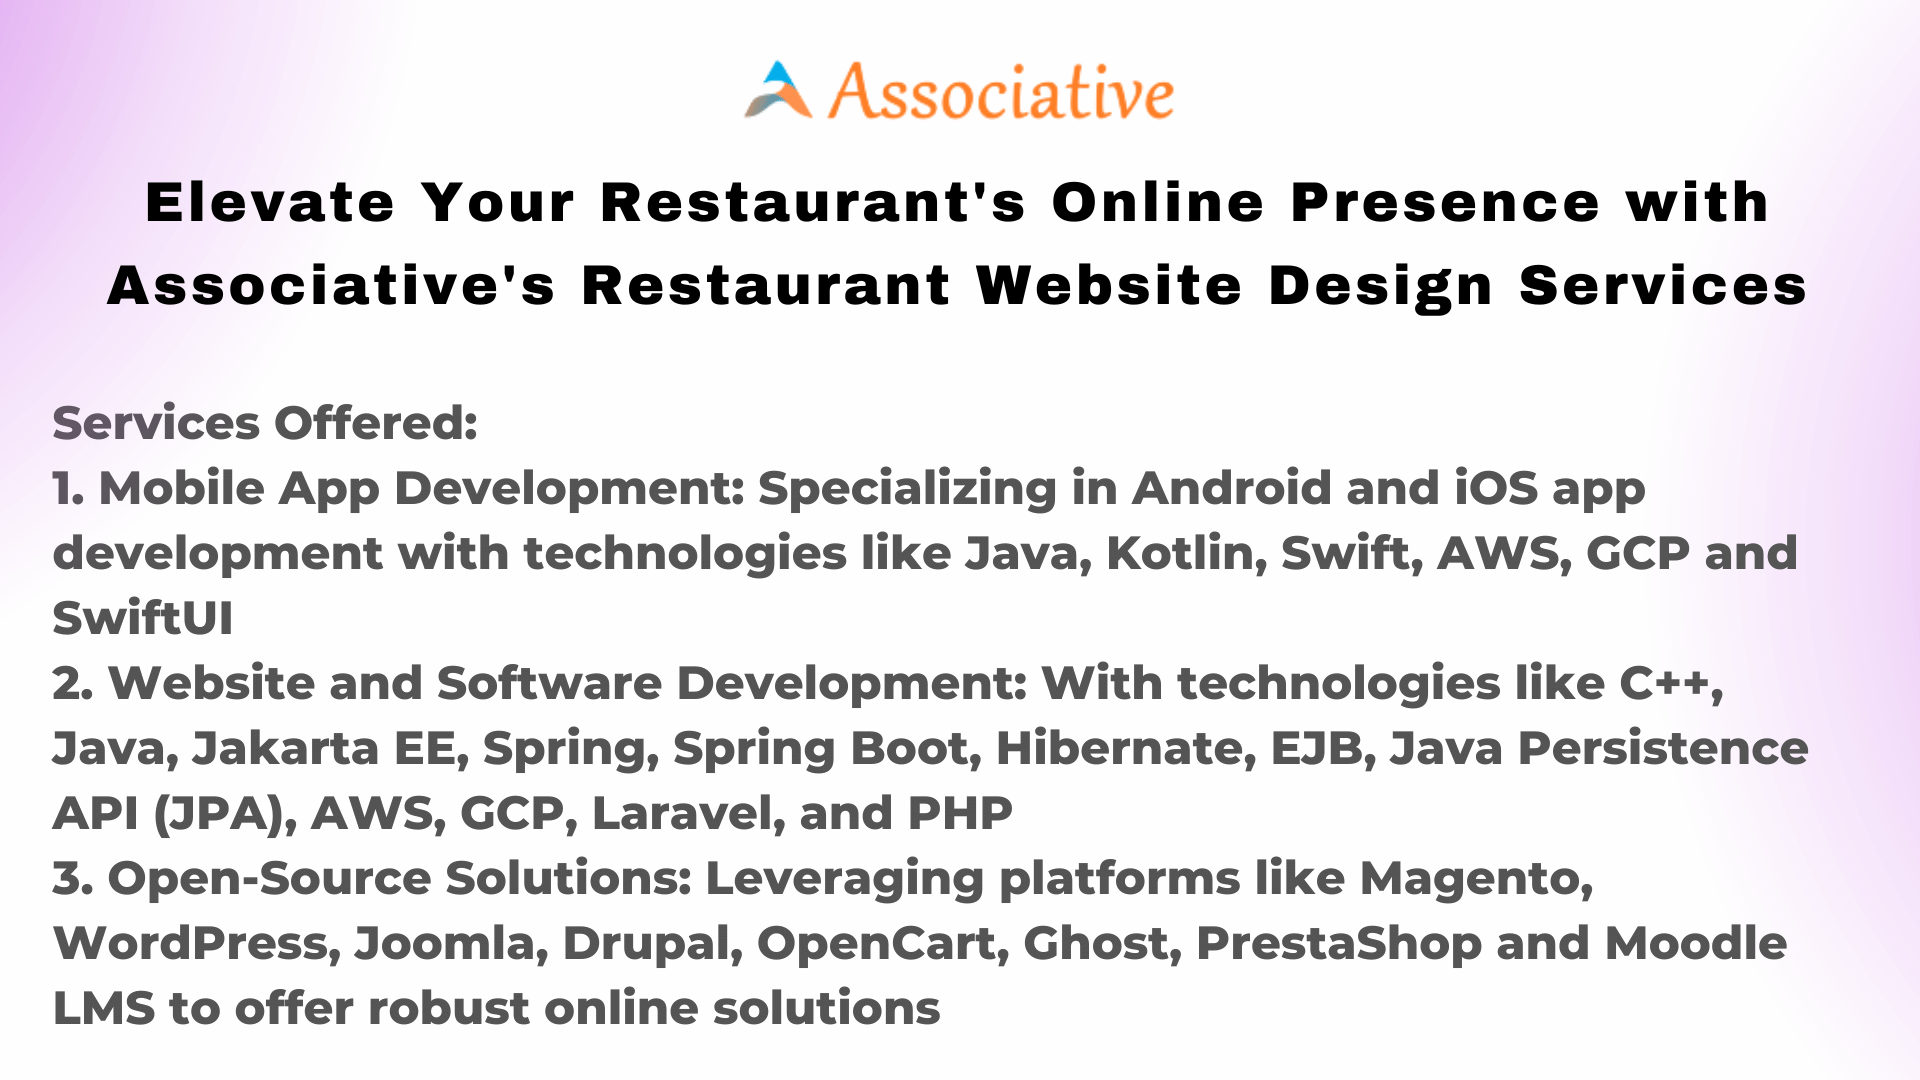 Elevate Your Restaurant's Online Presence with Associative's Restaurant Website Design Services